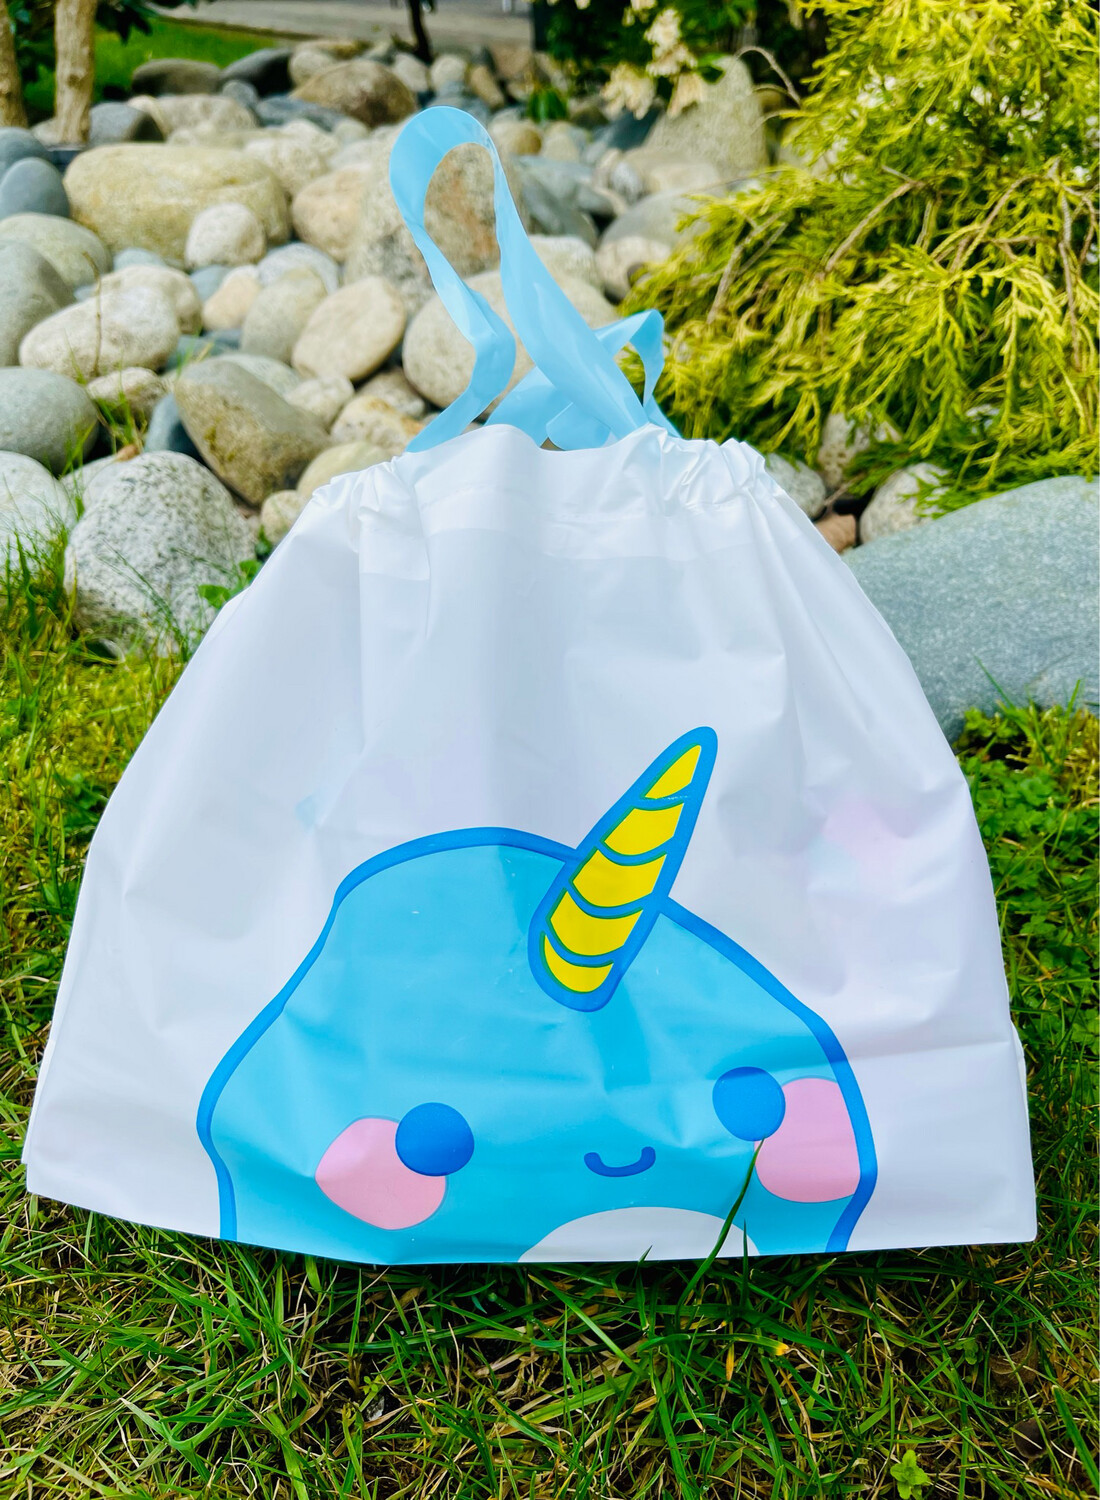 Rainbowcatz Mystery Squishy Grab Bag $25